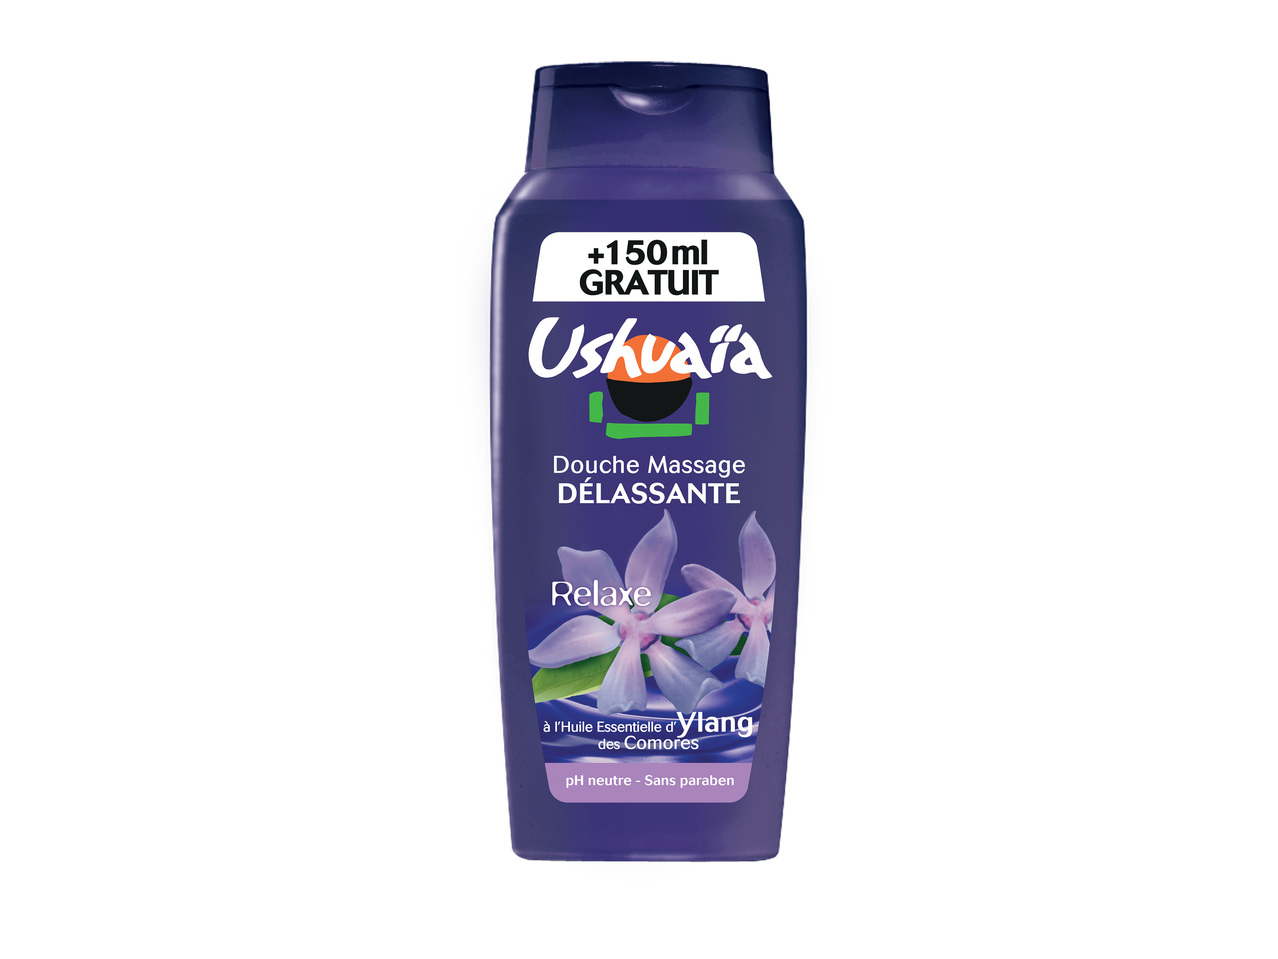 Ushuaïa shampooing douche